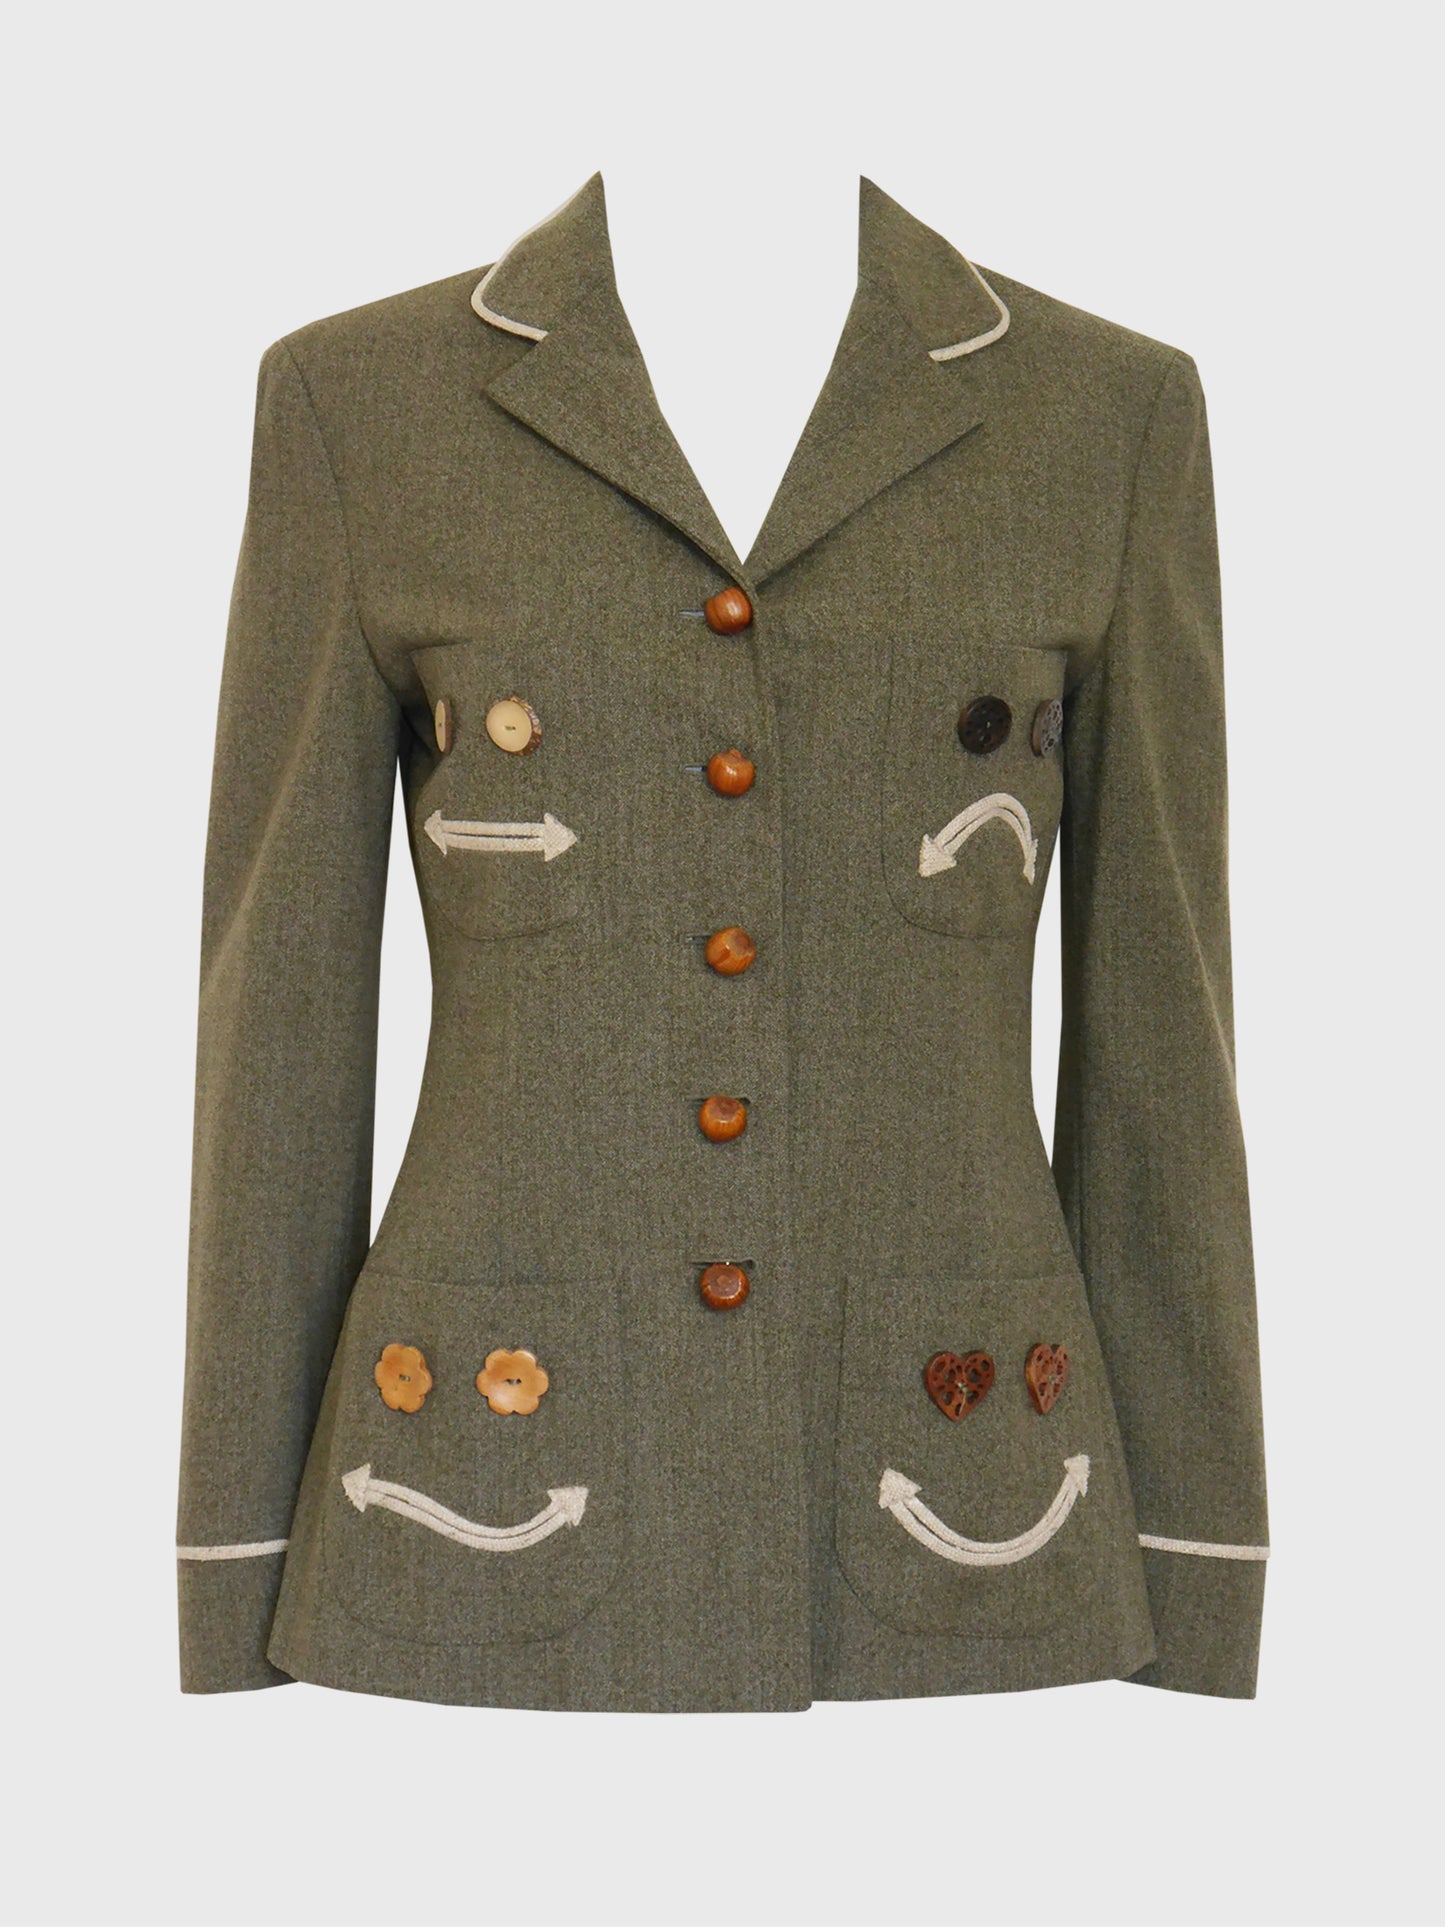 MOSCHINO 1990s Vintage Happy/Sad Face Smiley Hazelnut Button Jacket